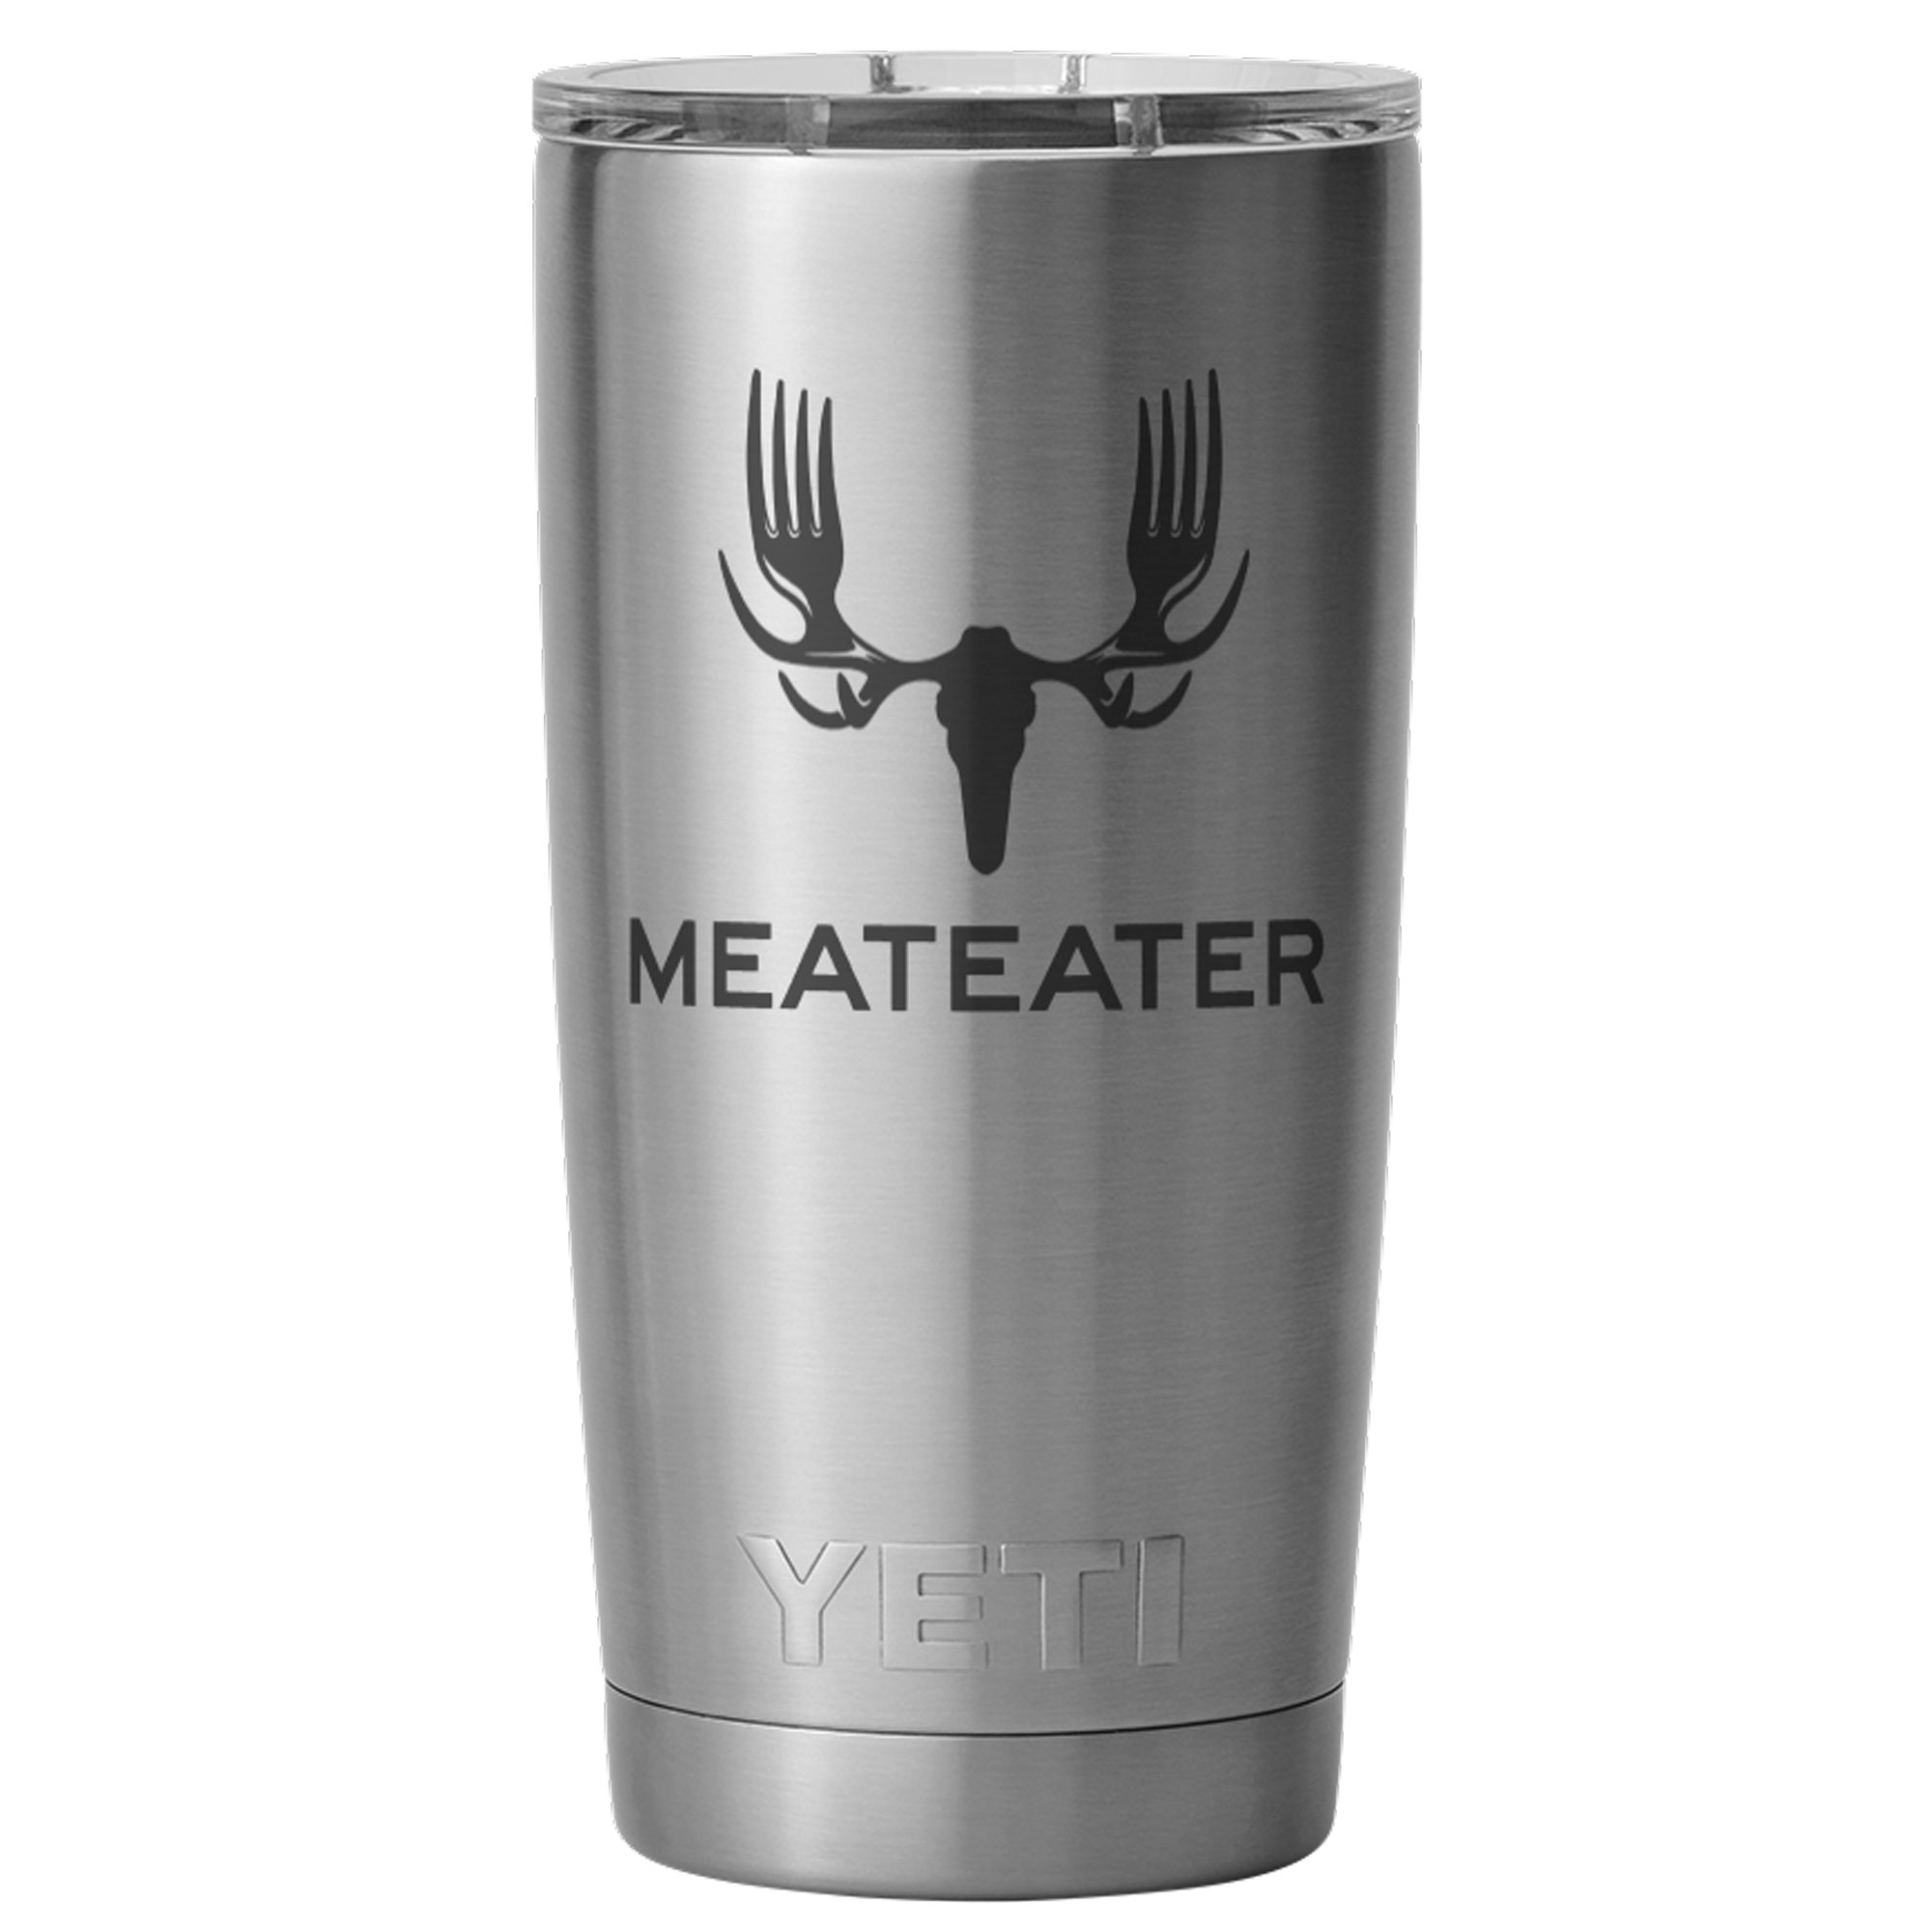 https://store.themeateater.com/on/demandware.static/-/Sites-meateater-master/default/dw9620fc36/meateater-yeti-rambler-20oz-tumbler/ME-rambler-20oz.jpg